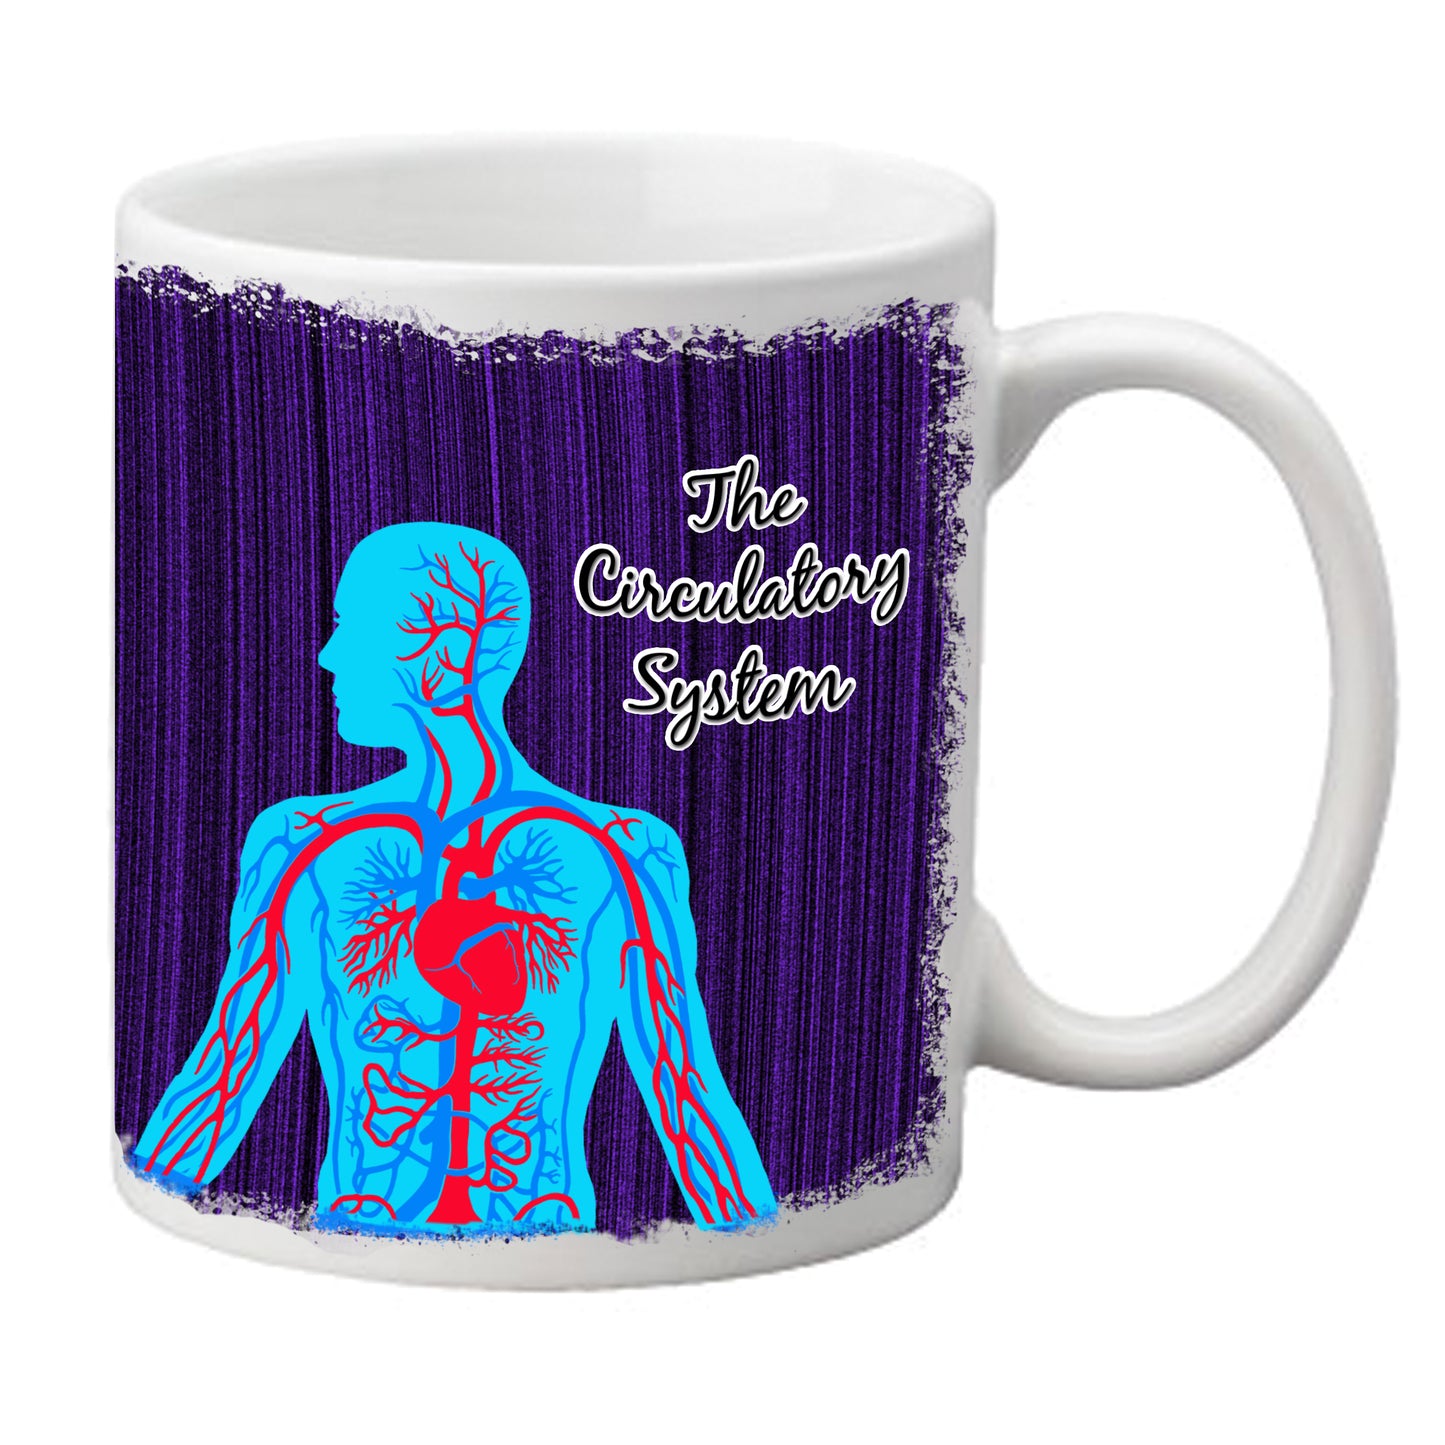 Circulatory System Mug